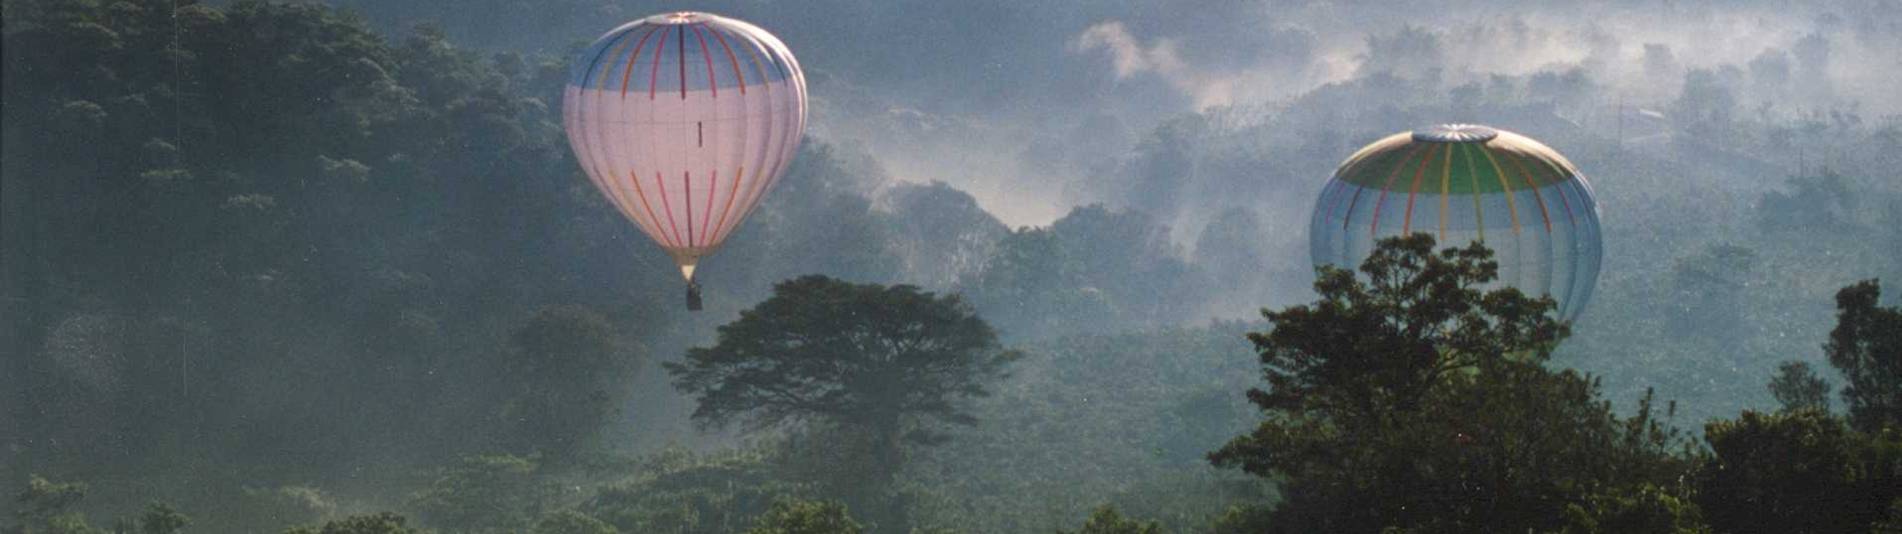 Serendipity Costa Rica balloons over rainforest in Costa Rica